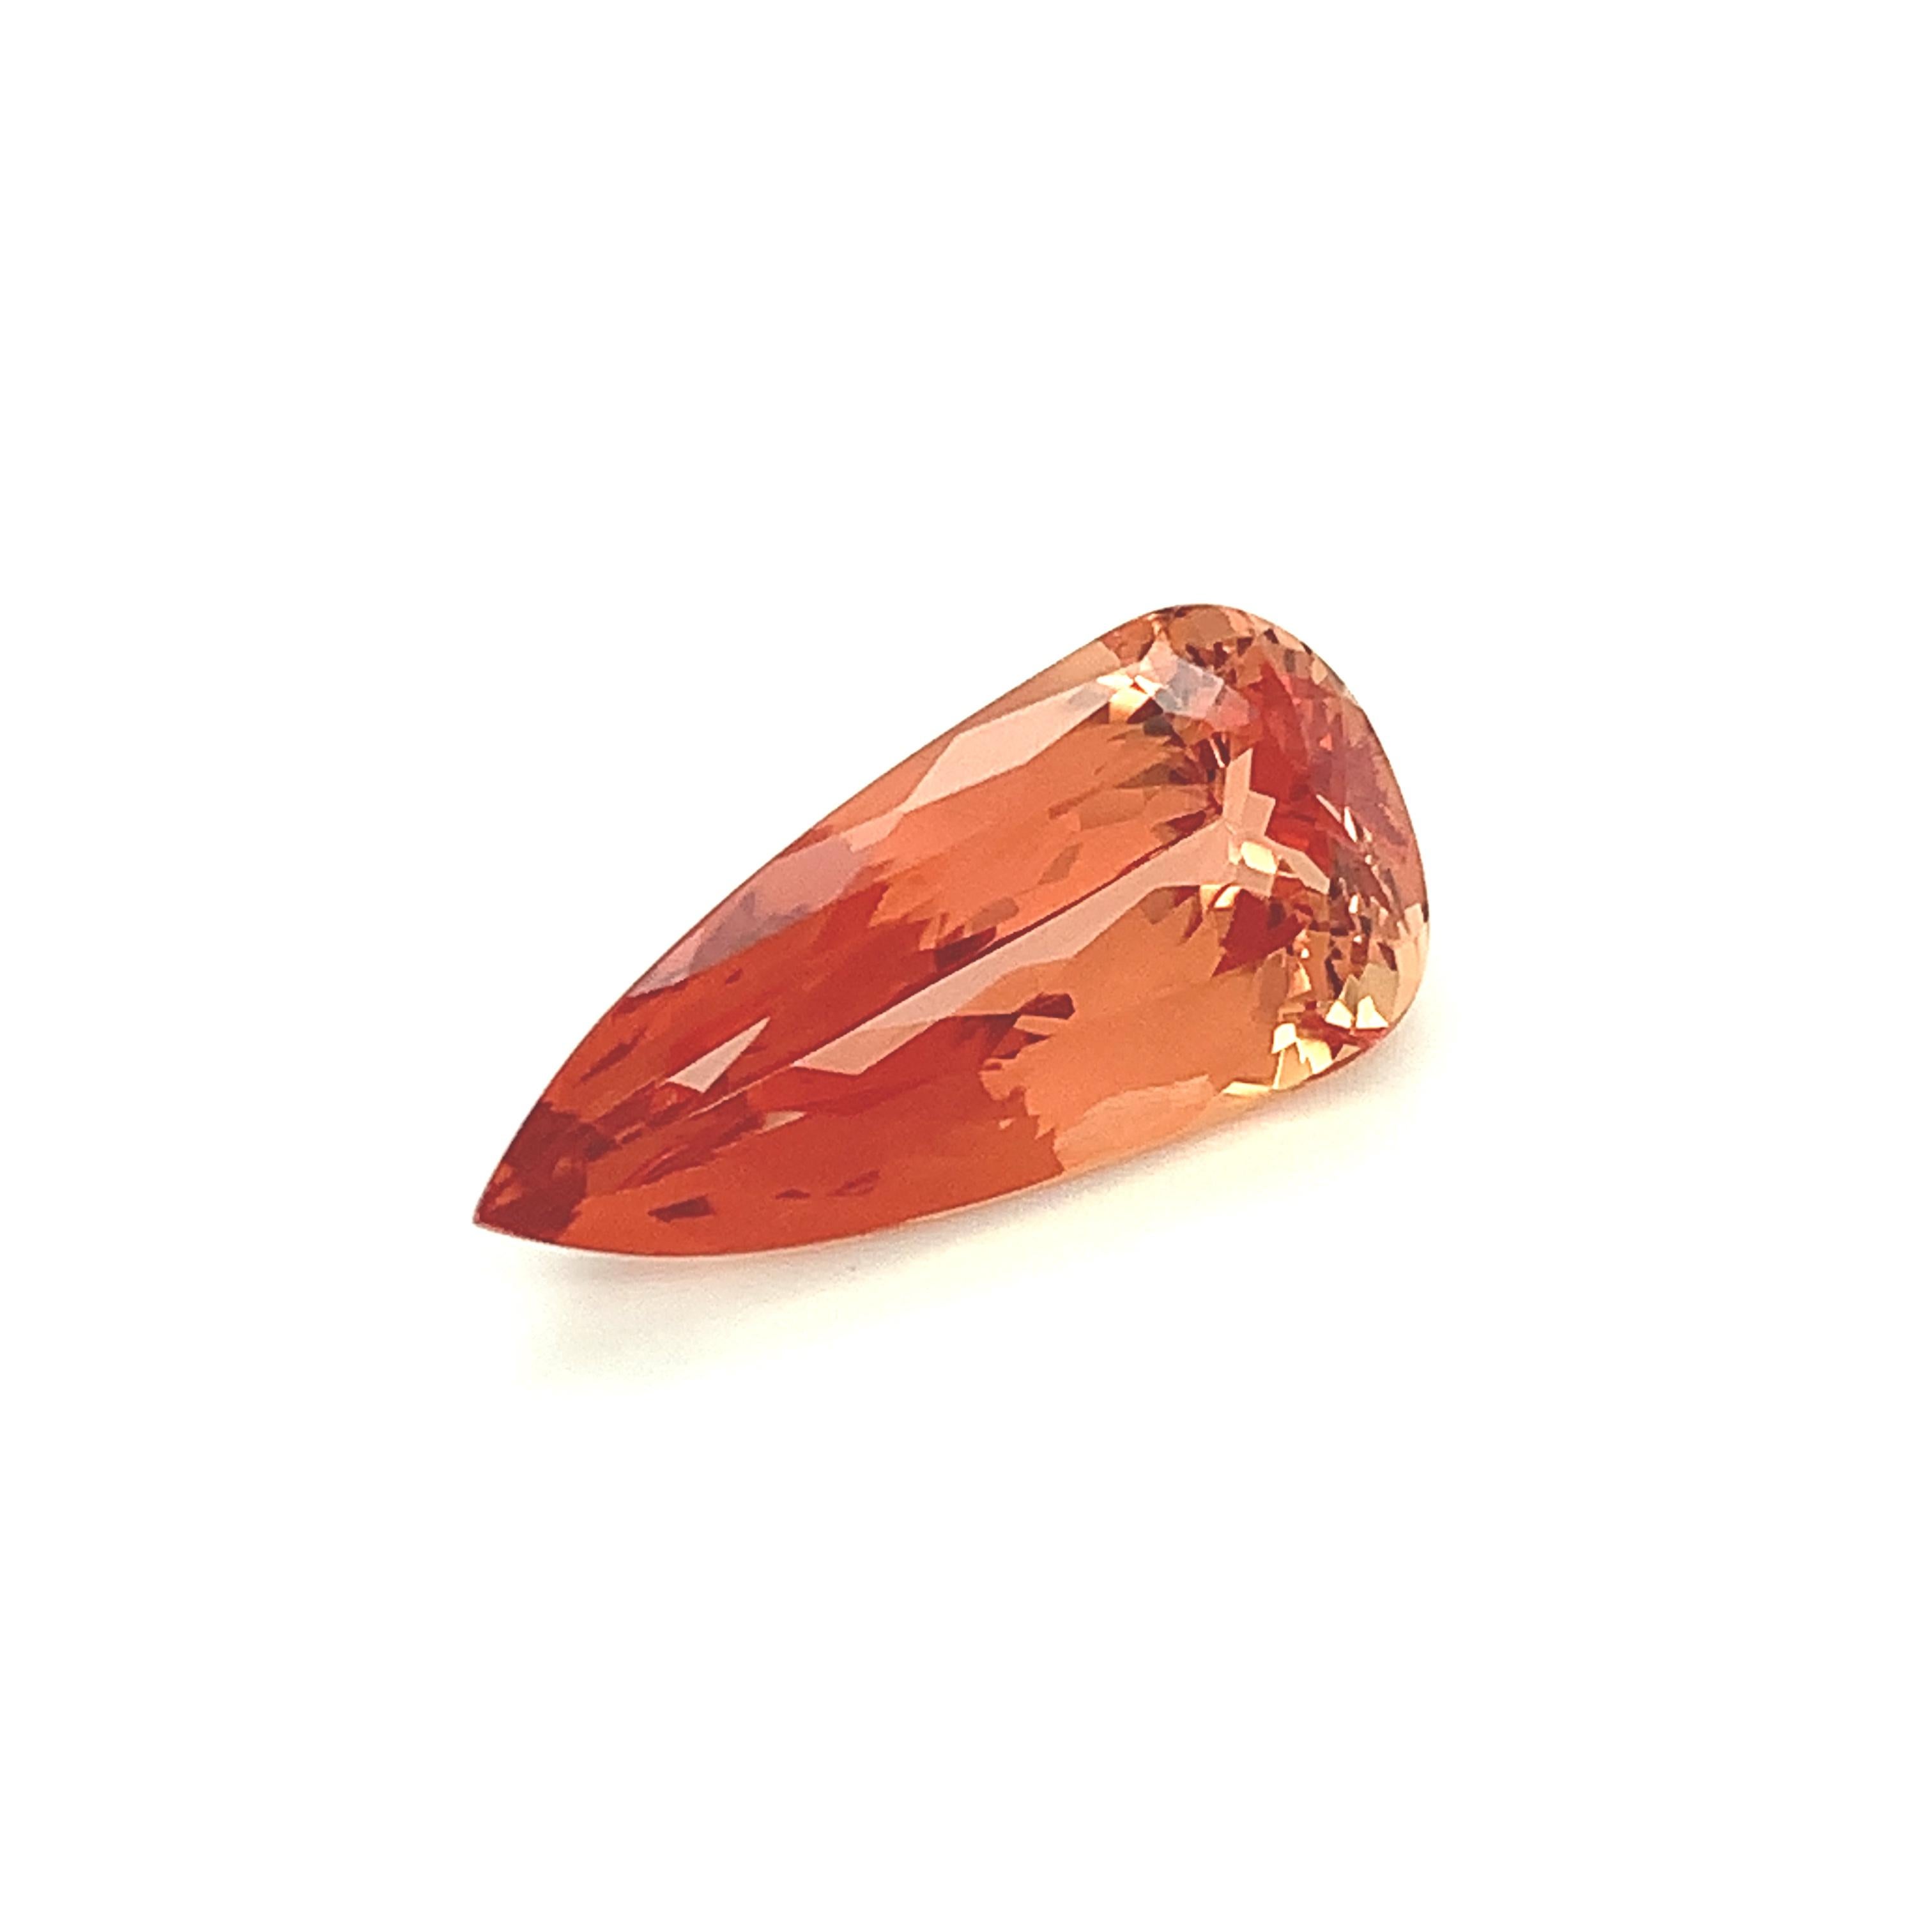 Topaze impériale orange 15,90 carats, pierre précieuse non sertie, certifiée GIA en vente 5